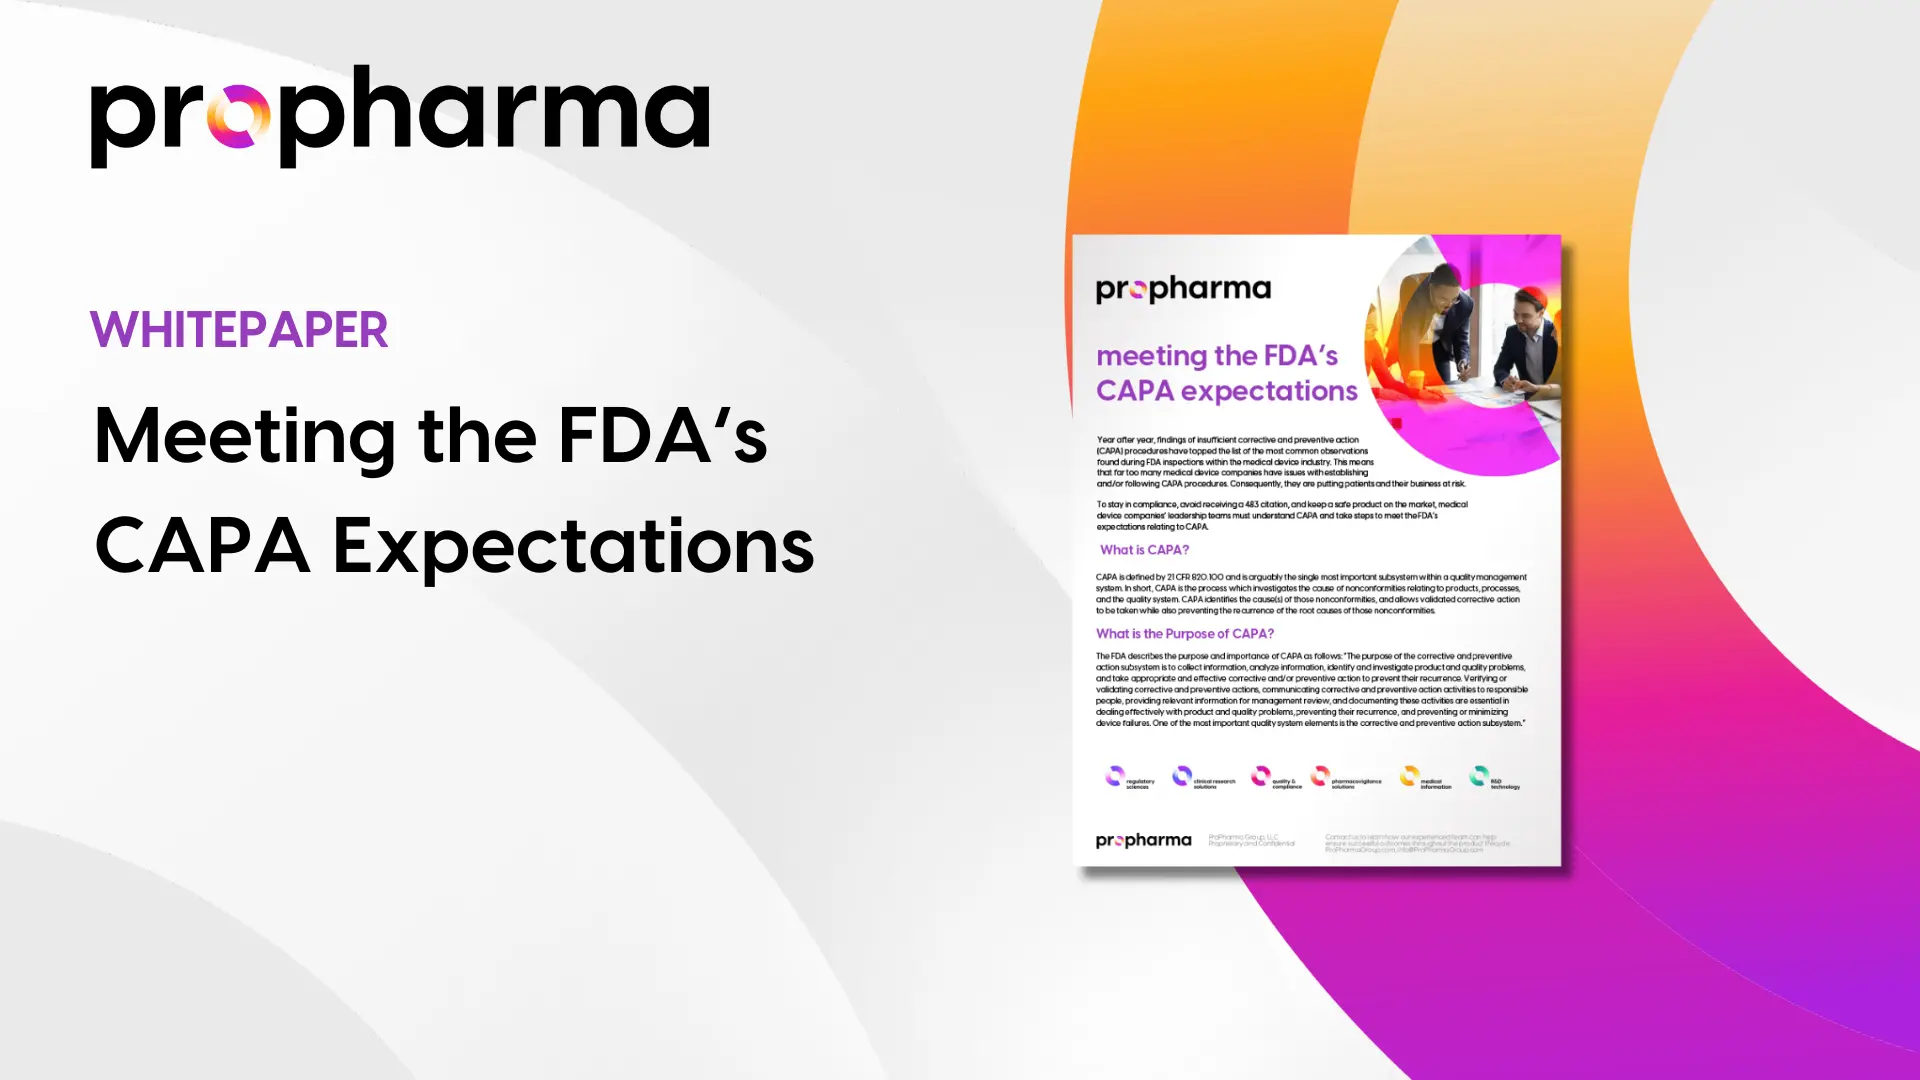 Meeting the FDA's CAPA Expectations - ProPharma